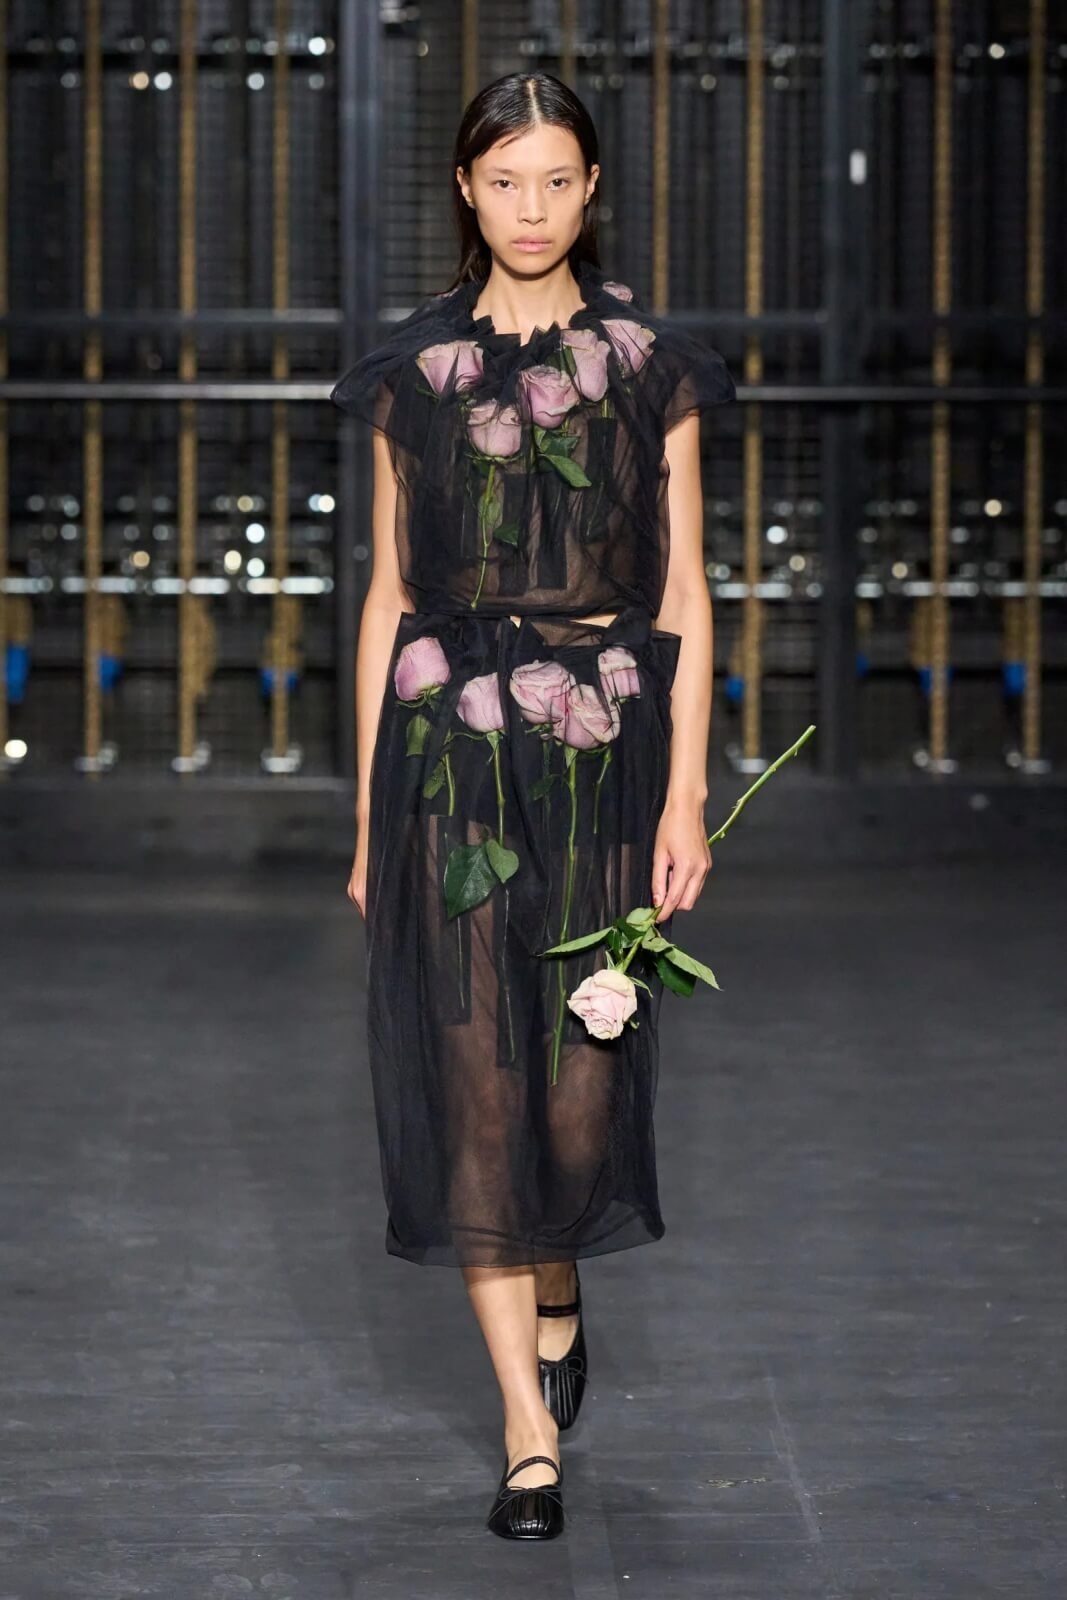 Model wearing black dress with pink roses inside